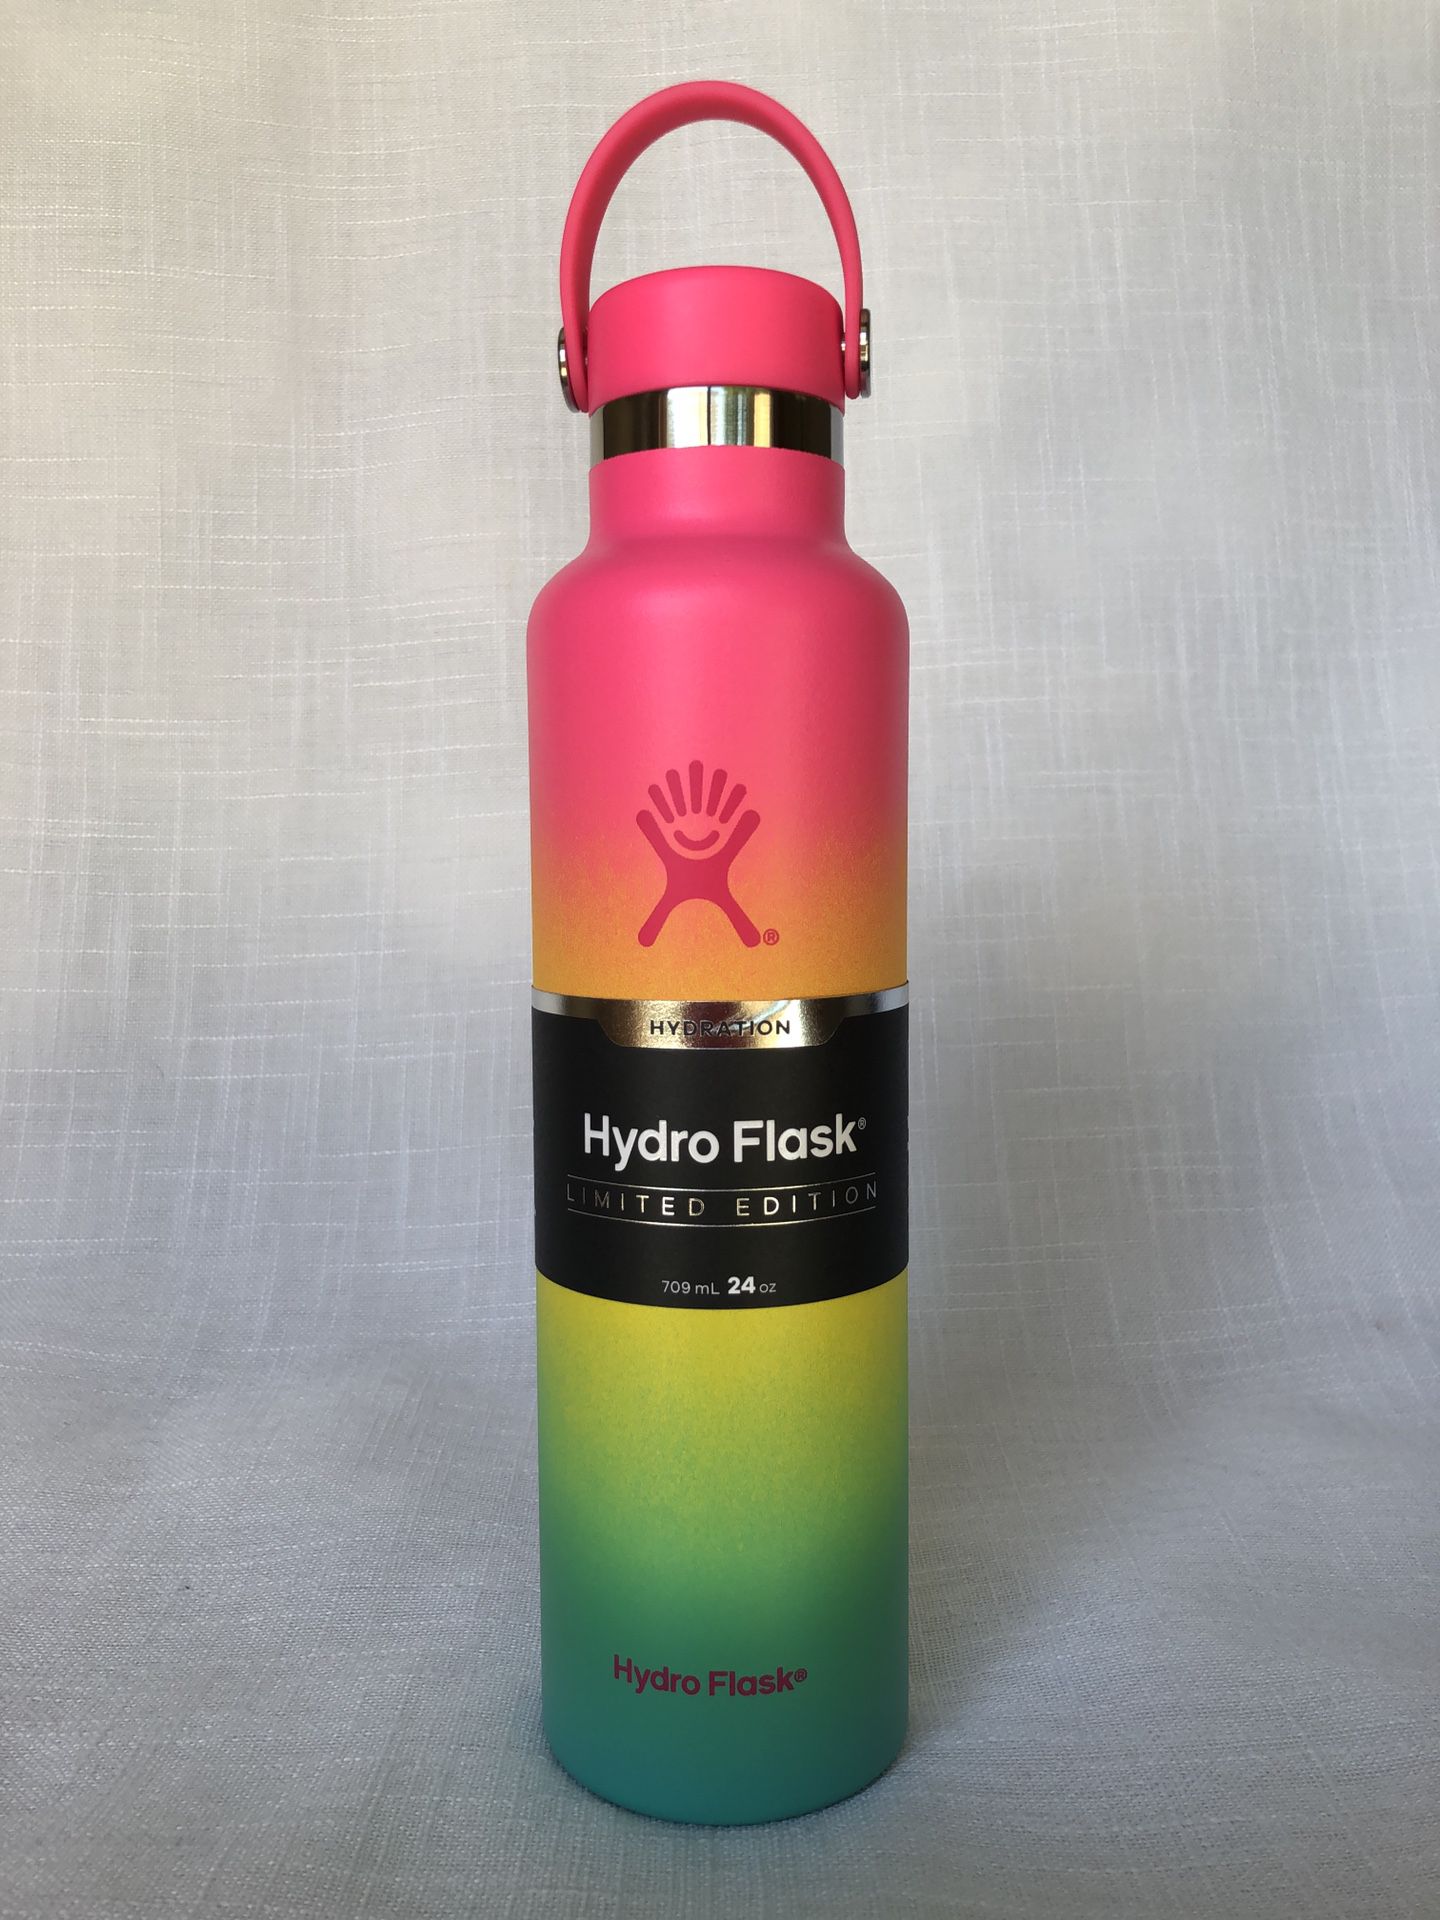 Hydro Flask Accessories for Sale in Glendora, CA - OfferUp